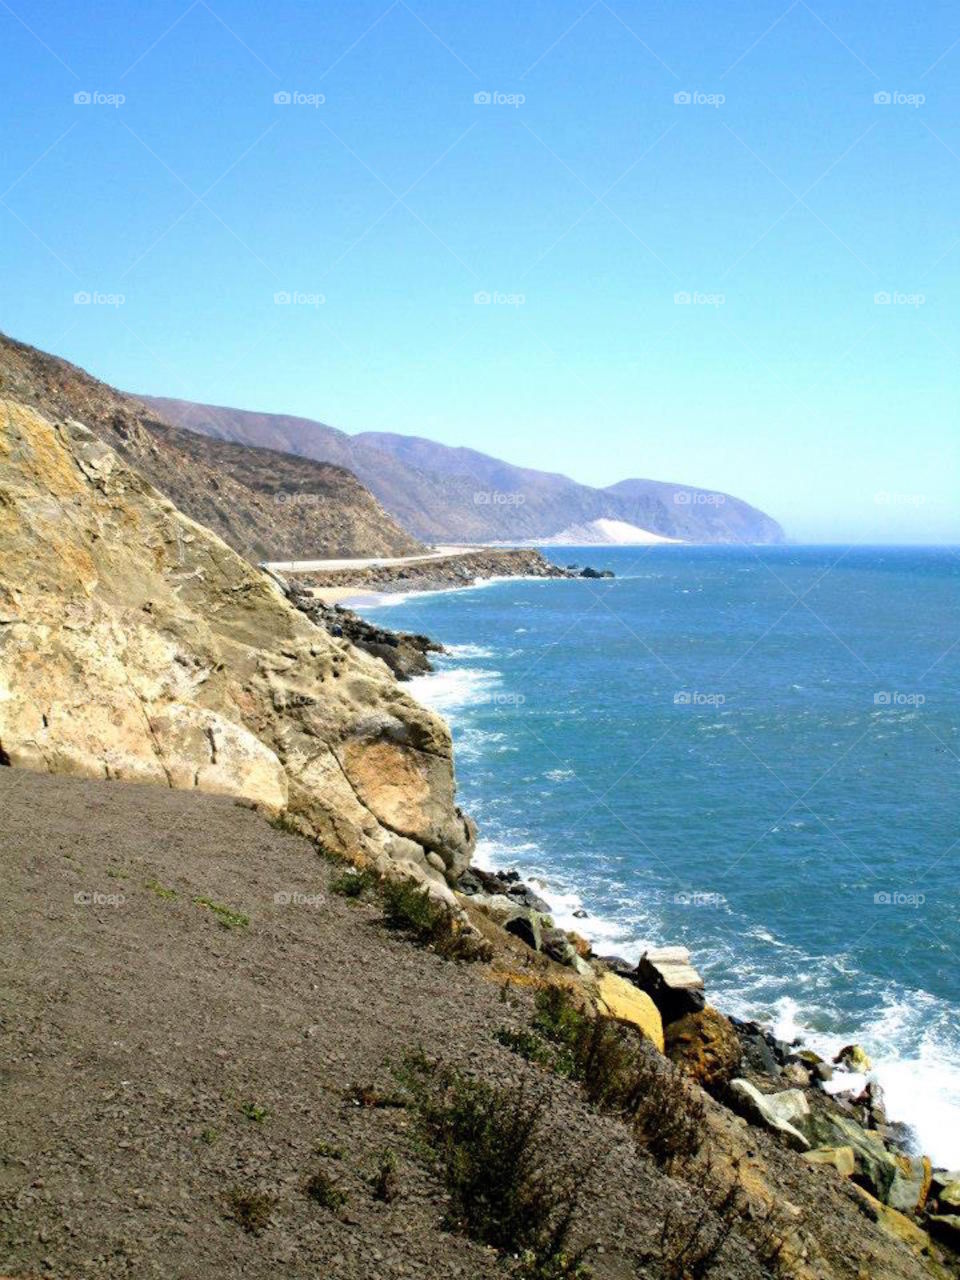 Pacific Cliffs. 2014